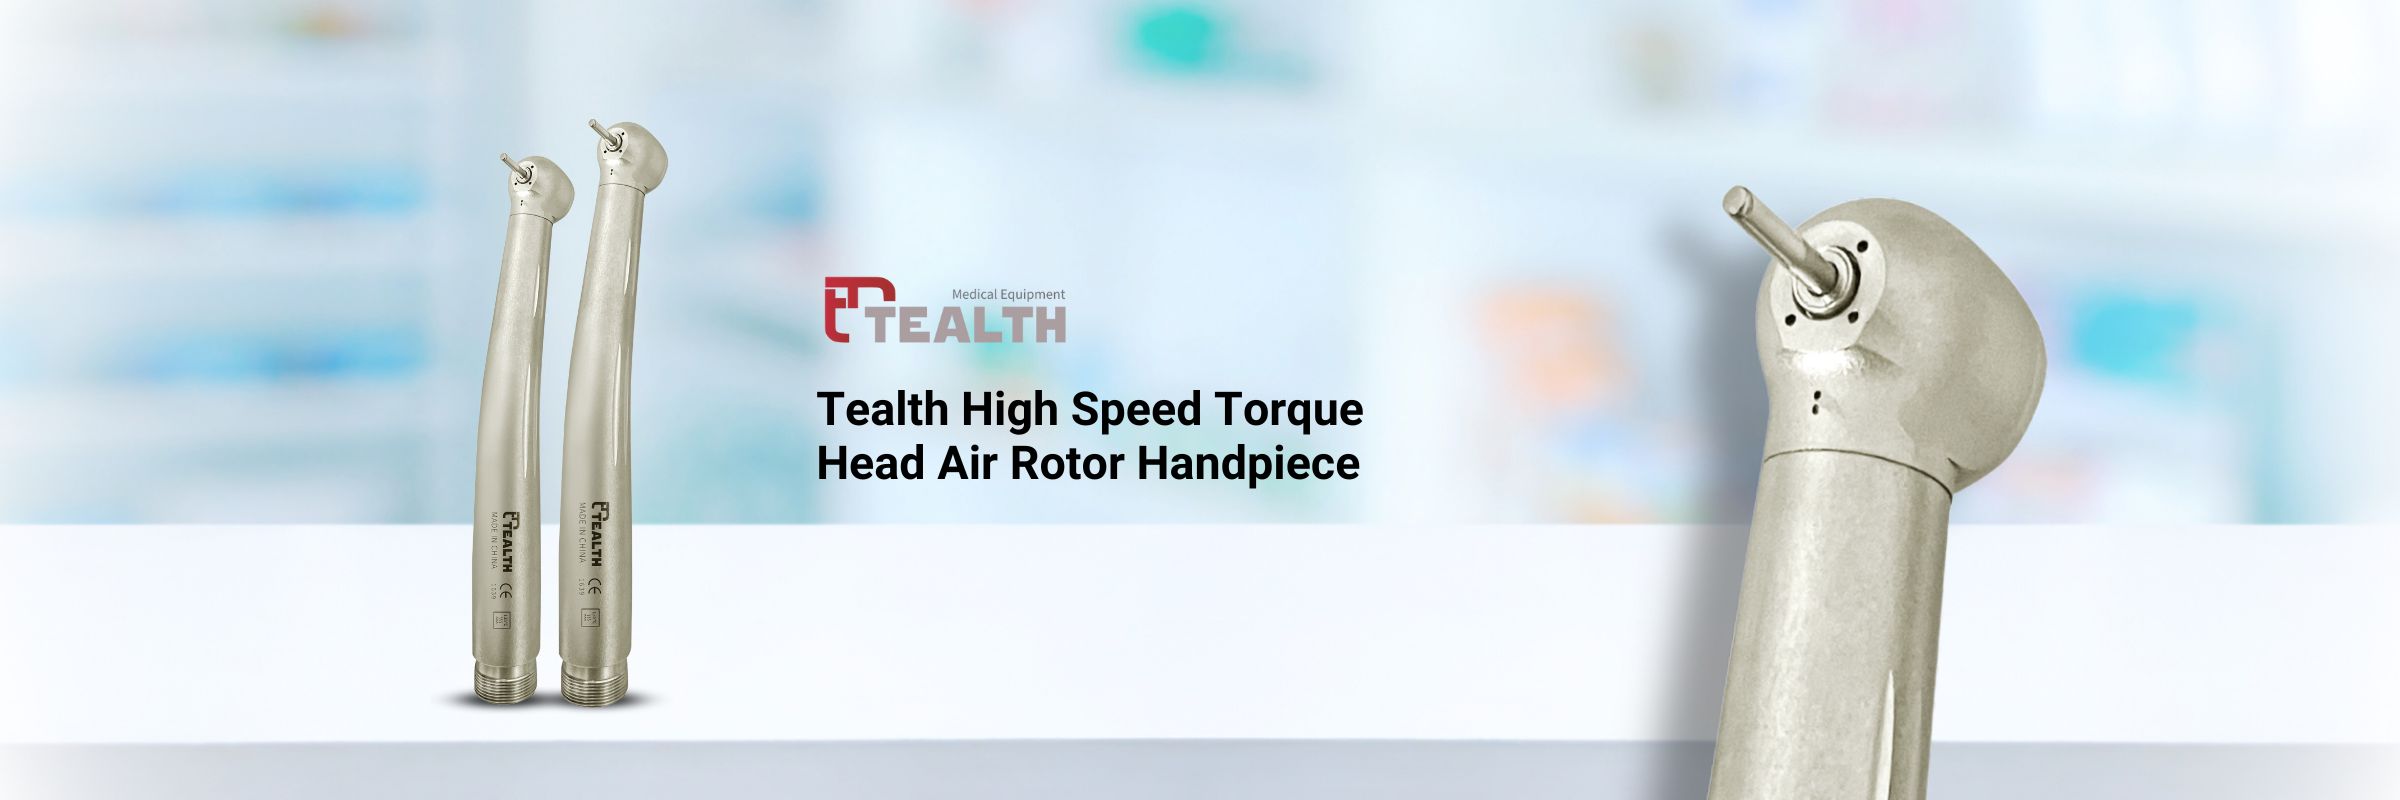 Tealth High Speed Torque Head Air Rotor Handpiece